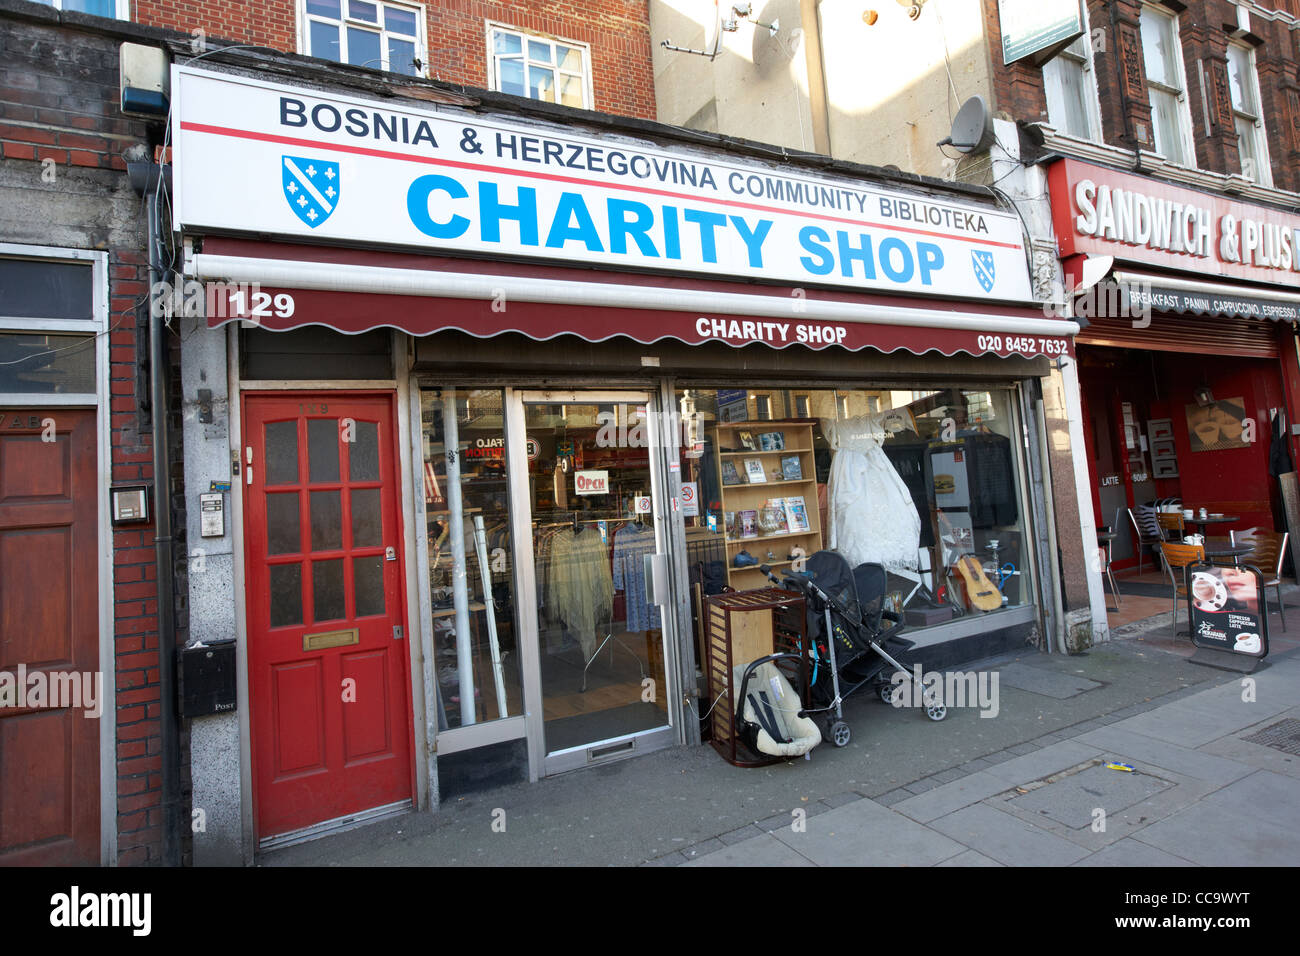 Bosnien Herzegowina Gemeinschaft Biblioteka kleine Charity shop Cricklewood North London England uk Stockfoto